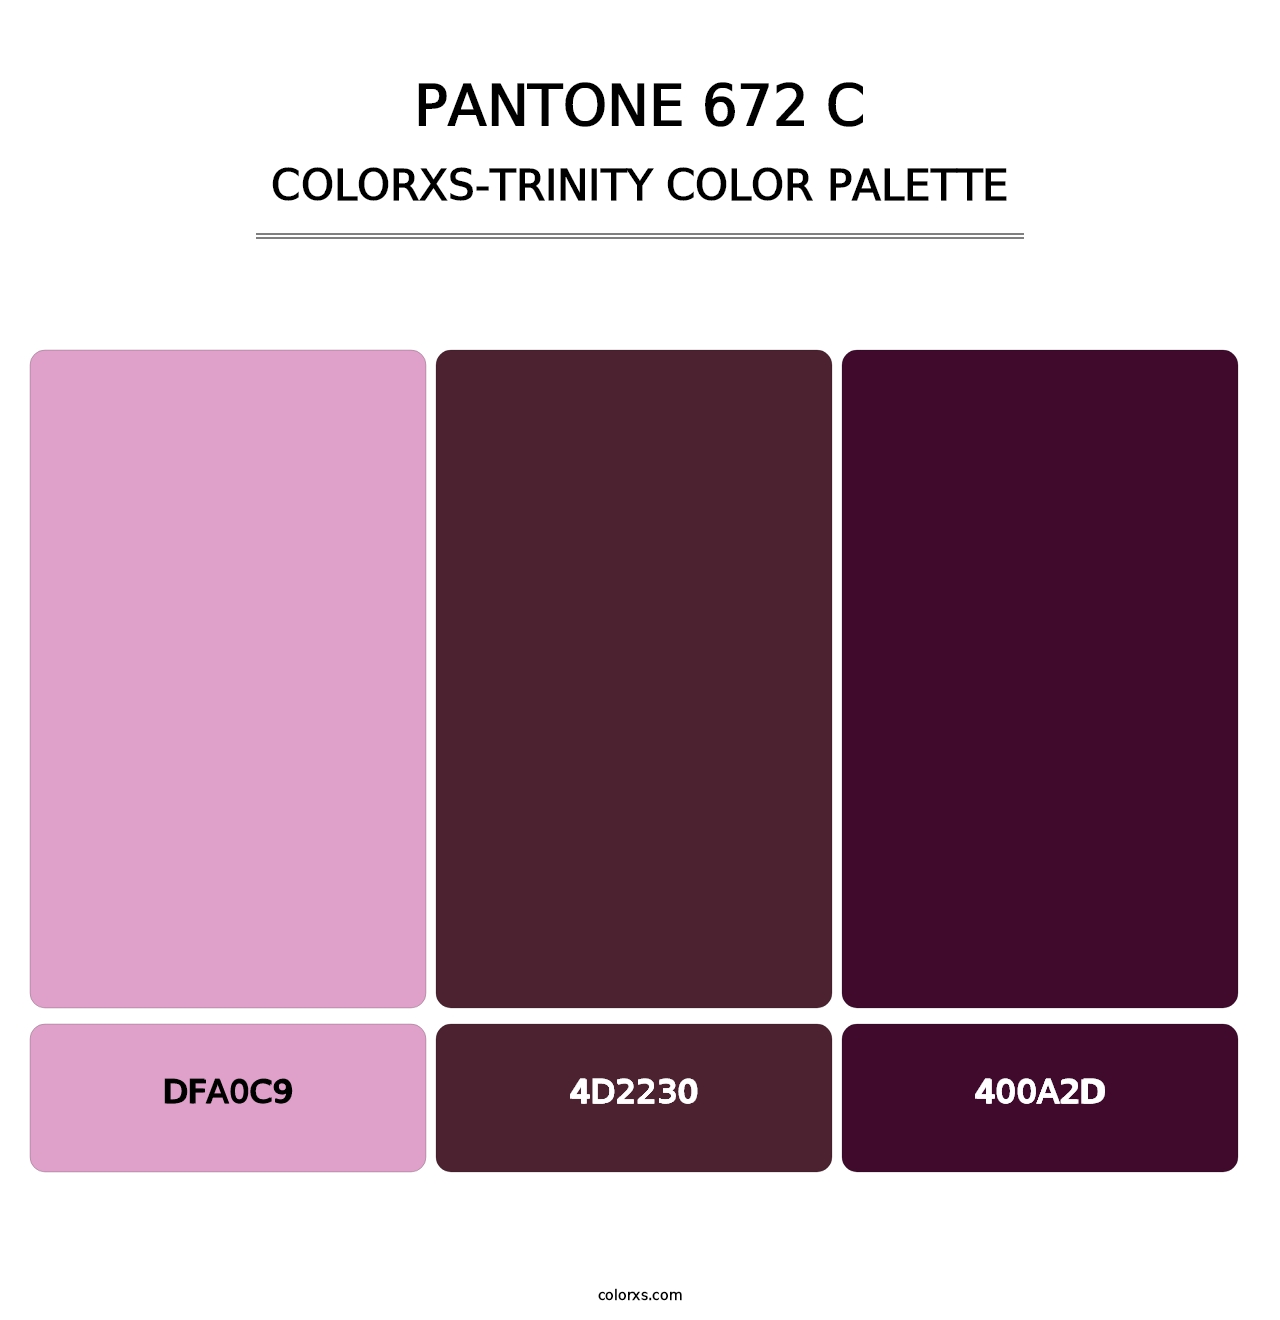 PANTONE 672 C - Colorxs Trinity Palette